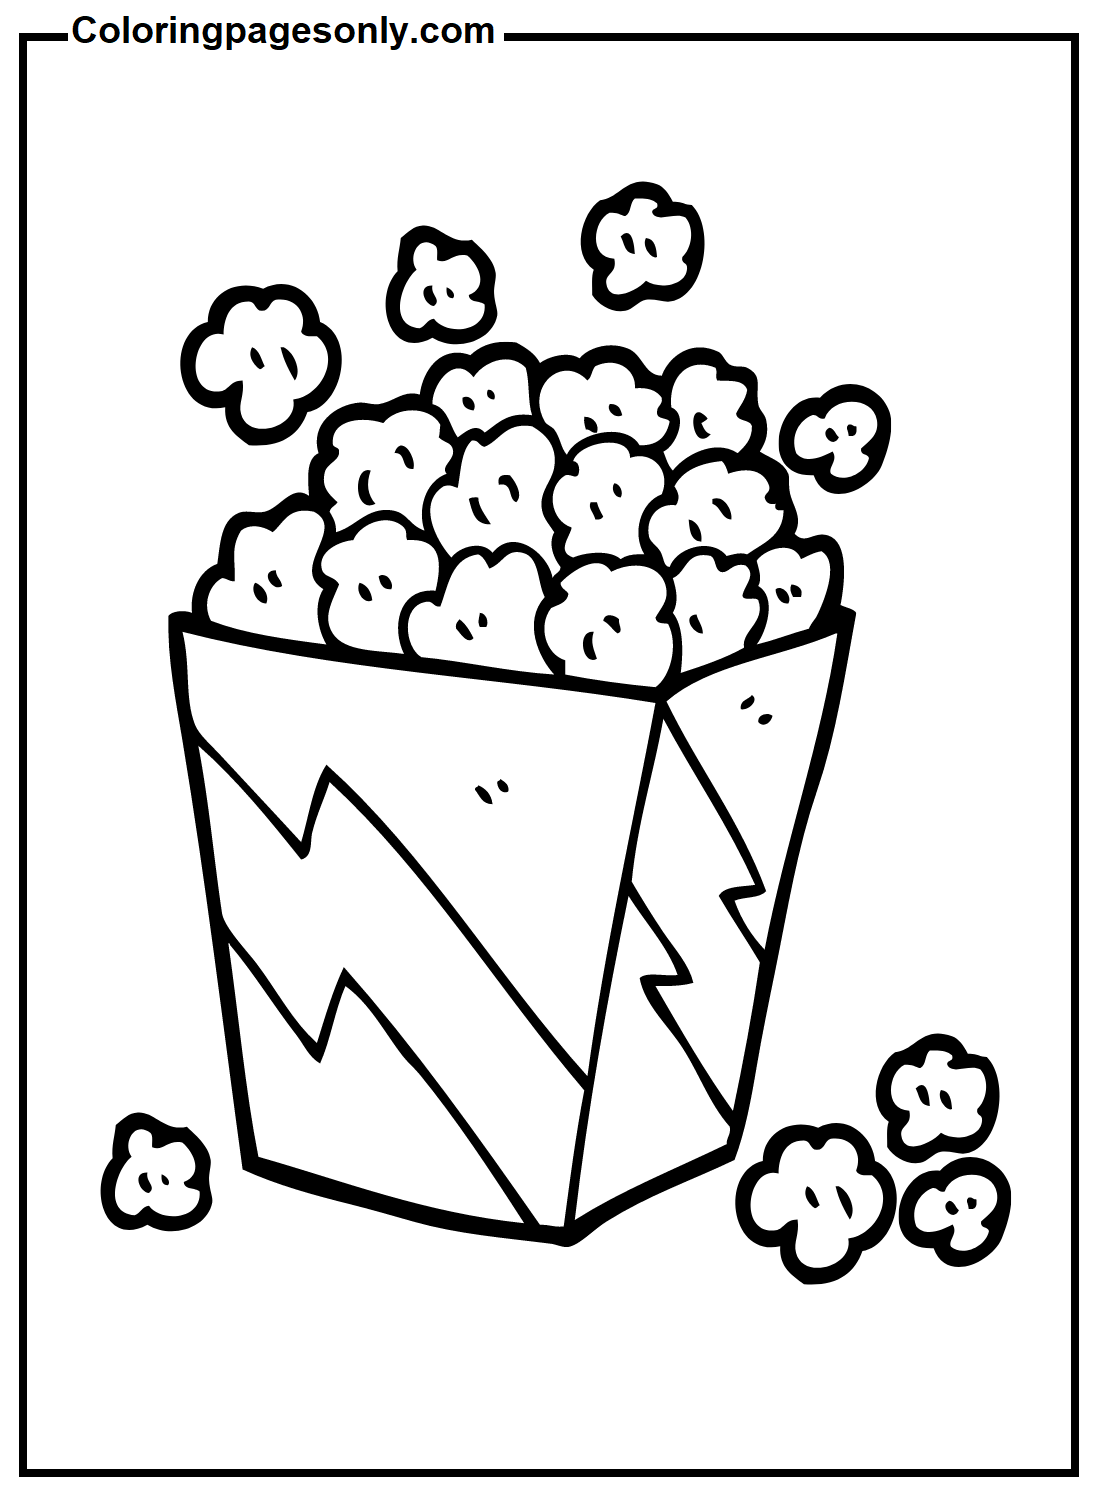 Popcorn da popcorn